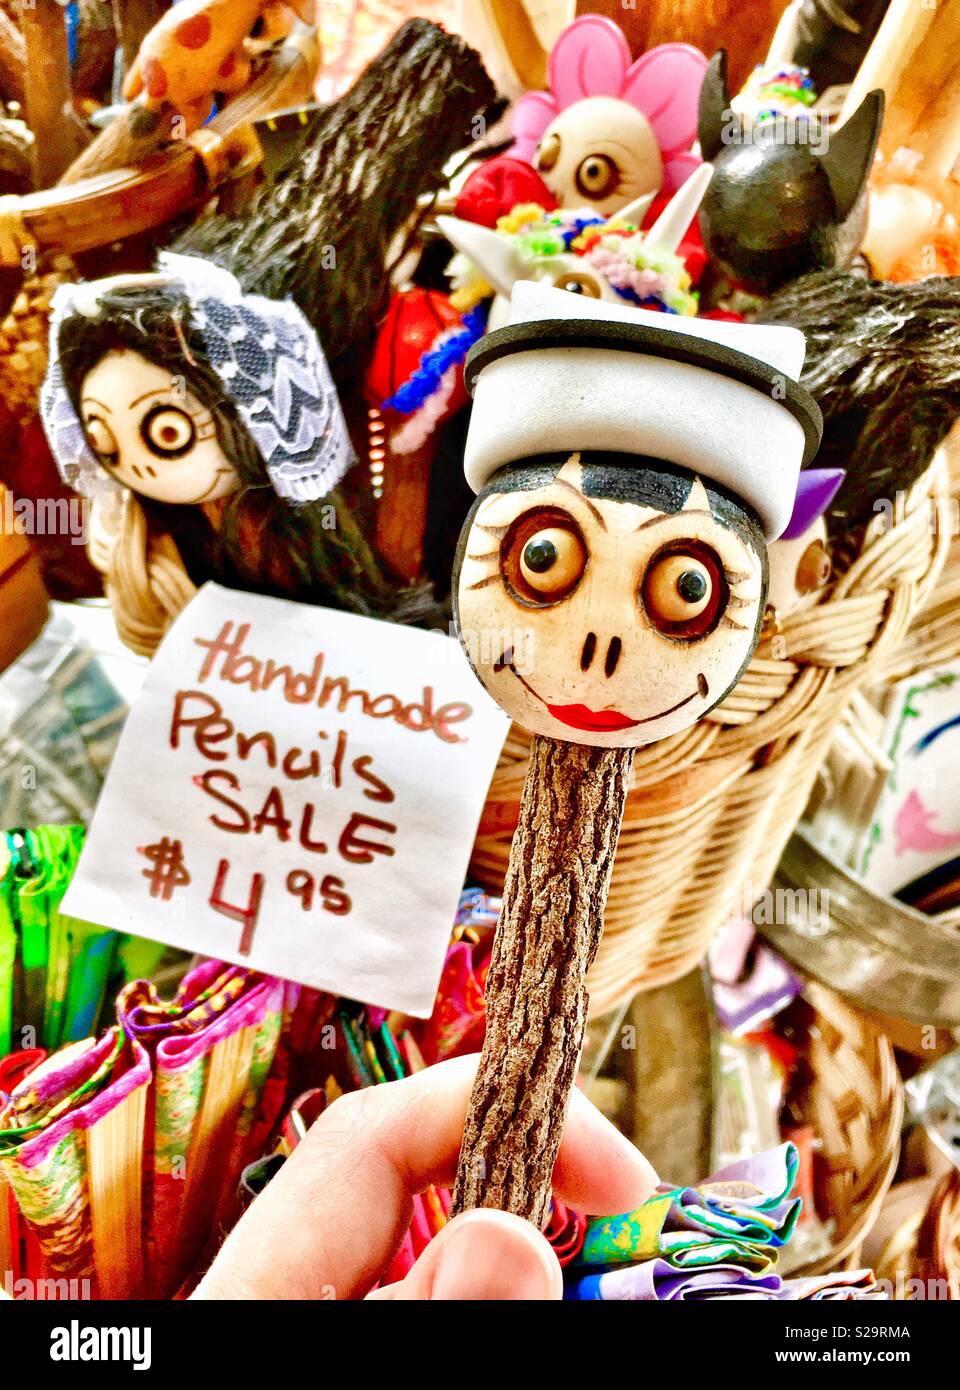 Creepy handmade pencils for sale, creepy nurse Stock Photo